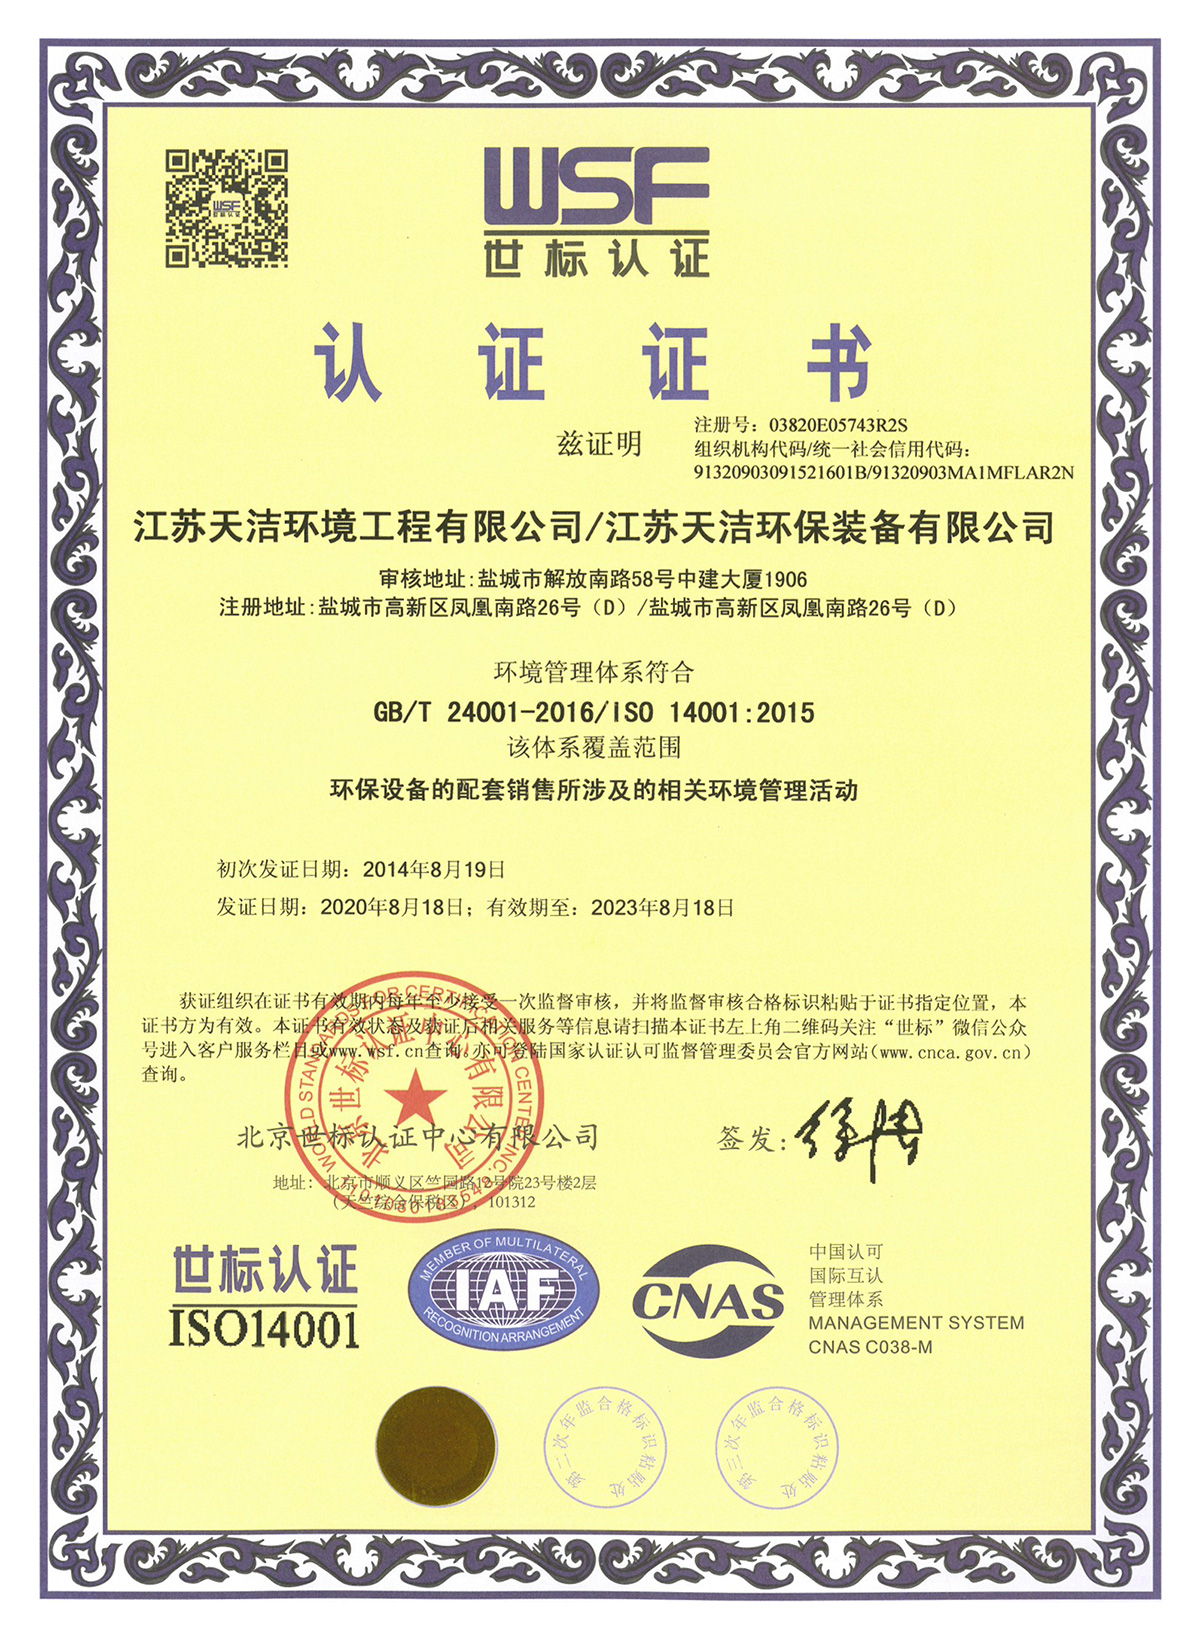 Certification certificate